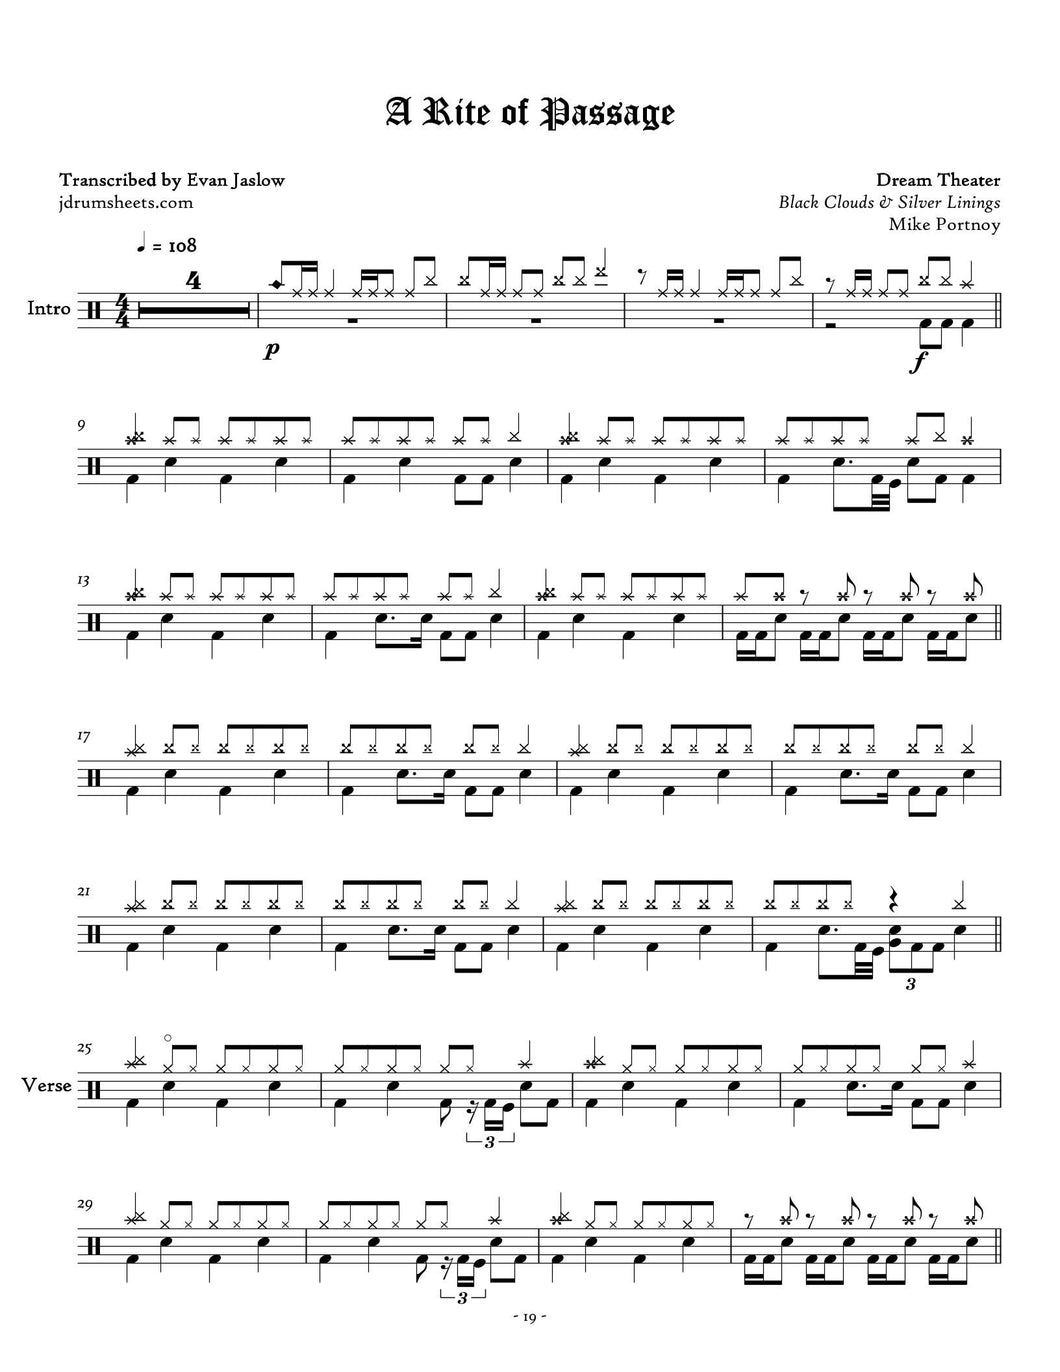 A Rite of Passage - Dream Theater - Full Drum Transcription / Drum Sheet Music - Jaslow Drum Sheets